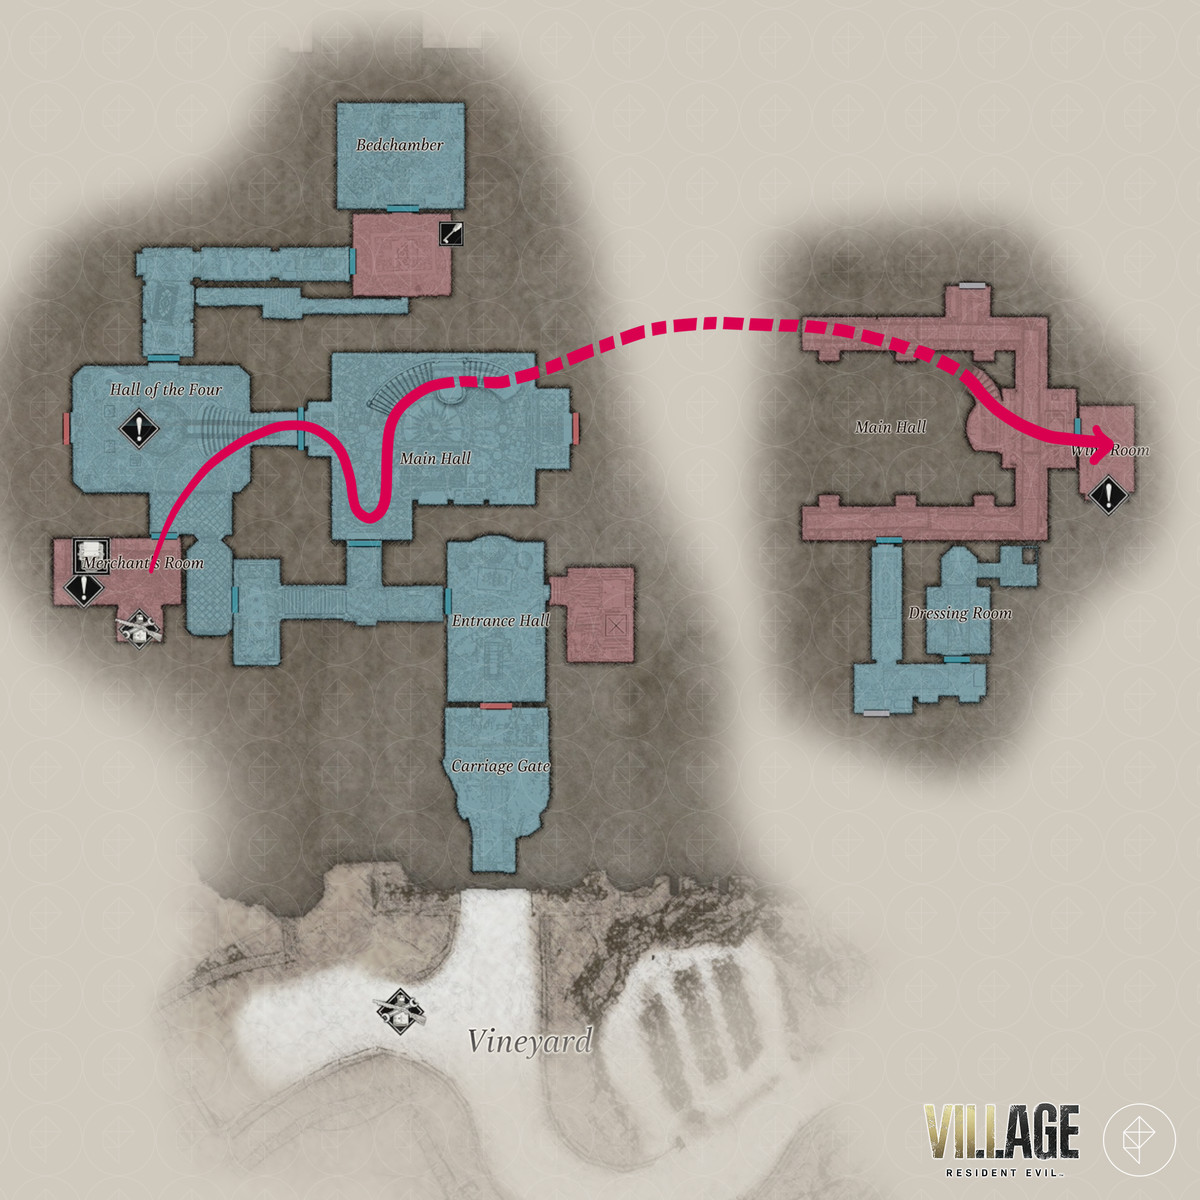 Resident Evil Village walkthrough part 3: Look for Rose in the castle